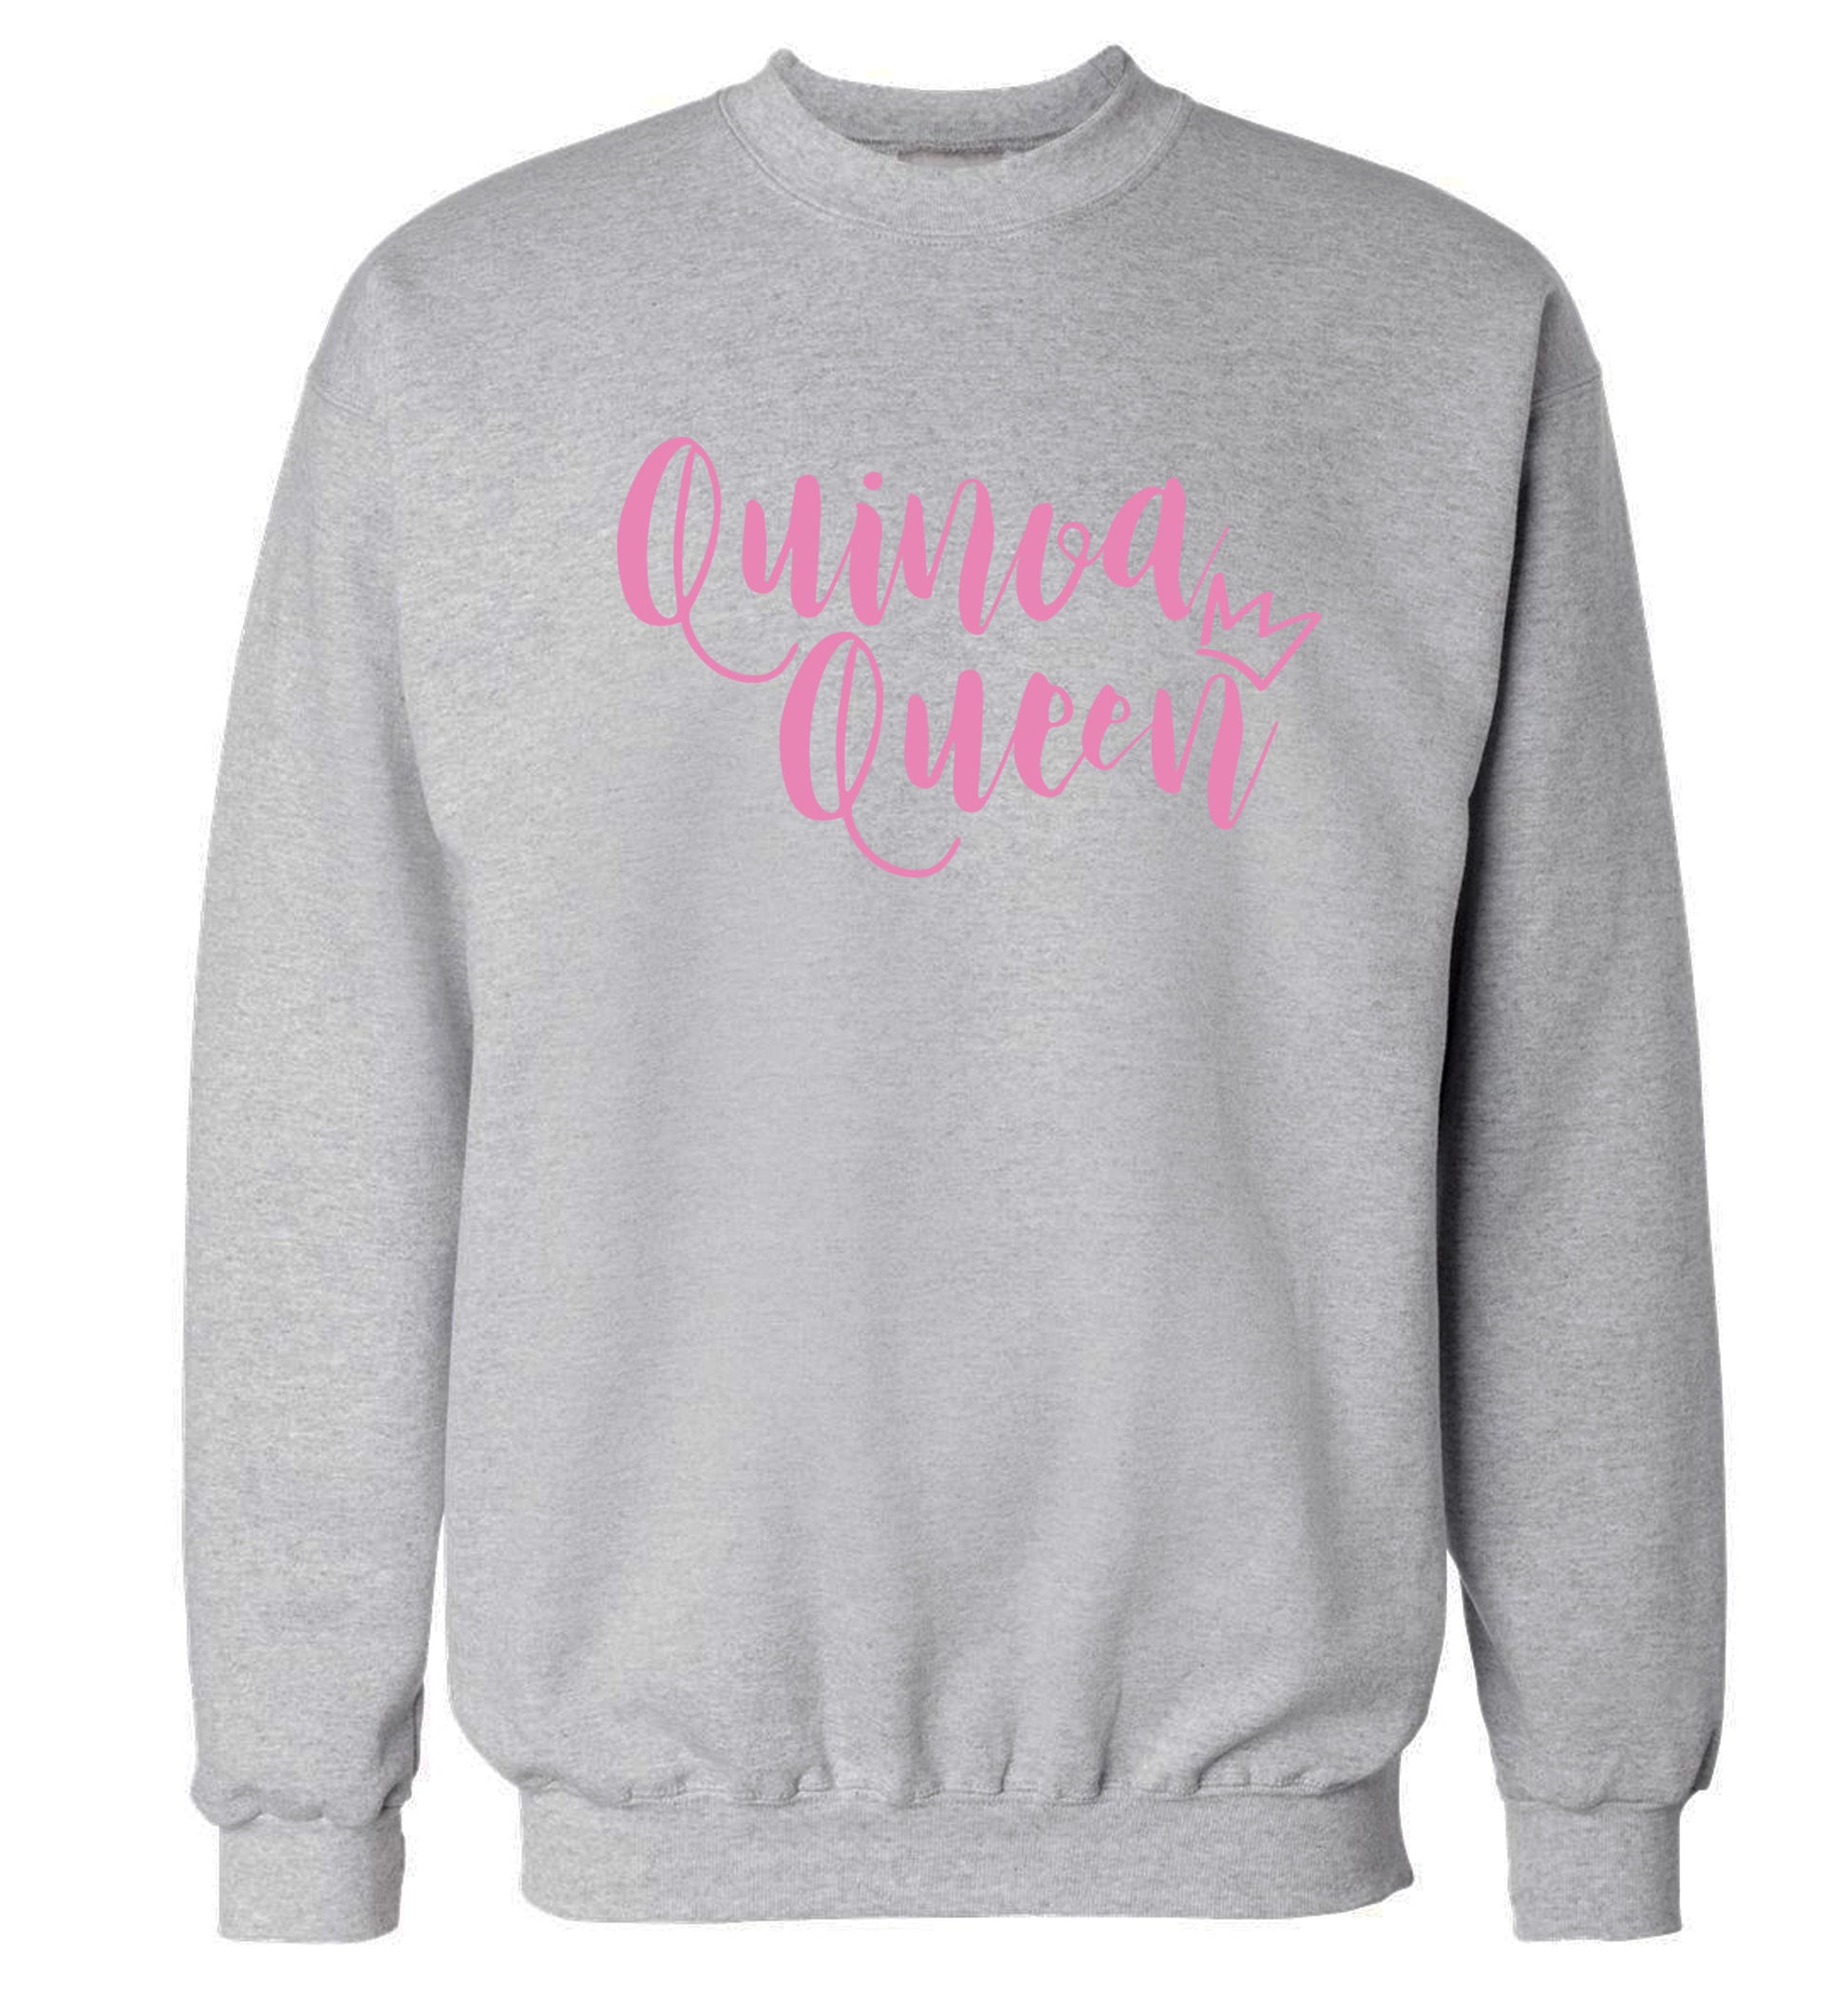 Quinoa Queen Adult's unisex grey  sweater 2XL